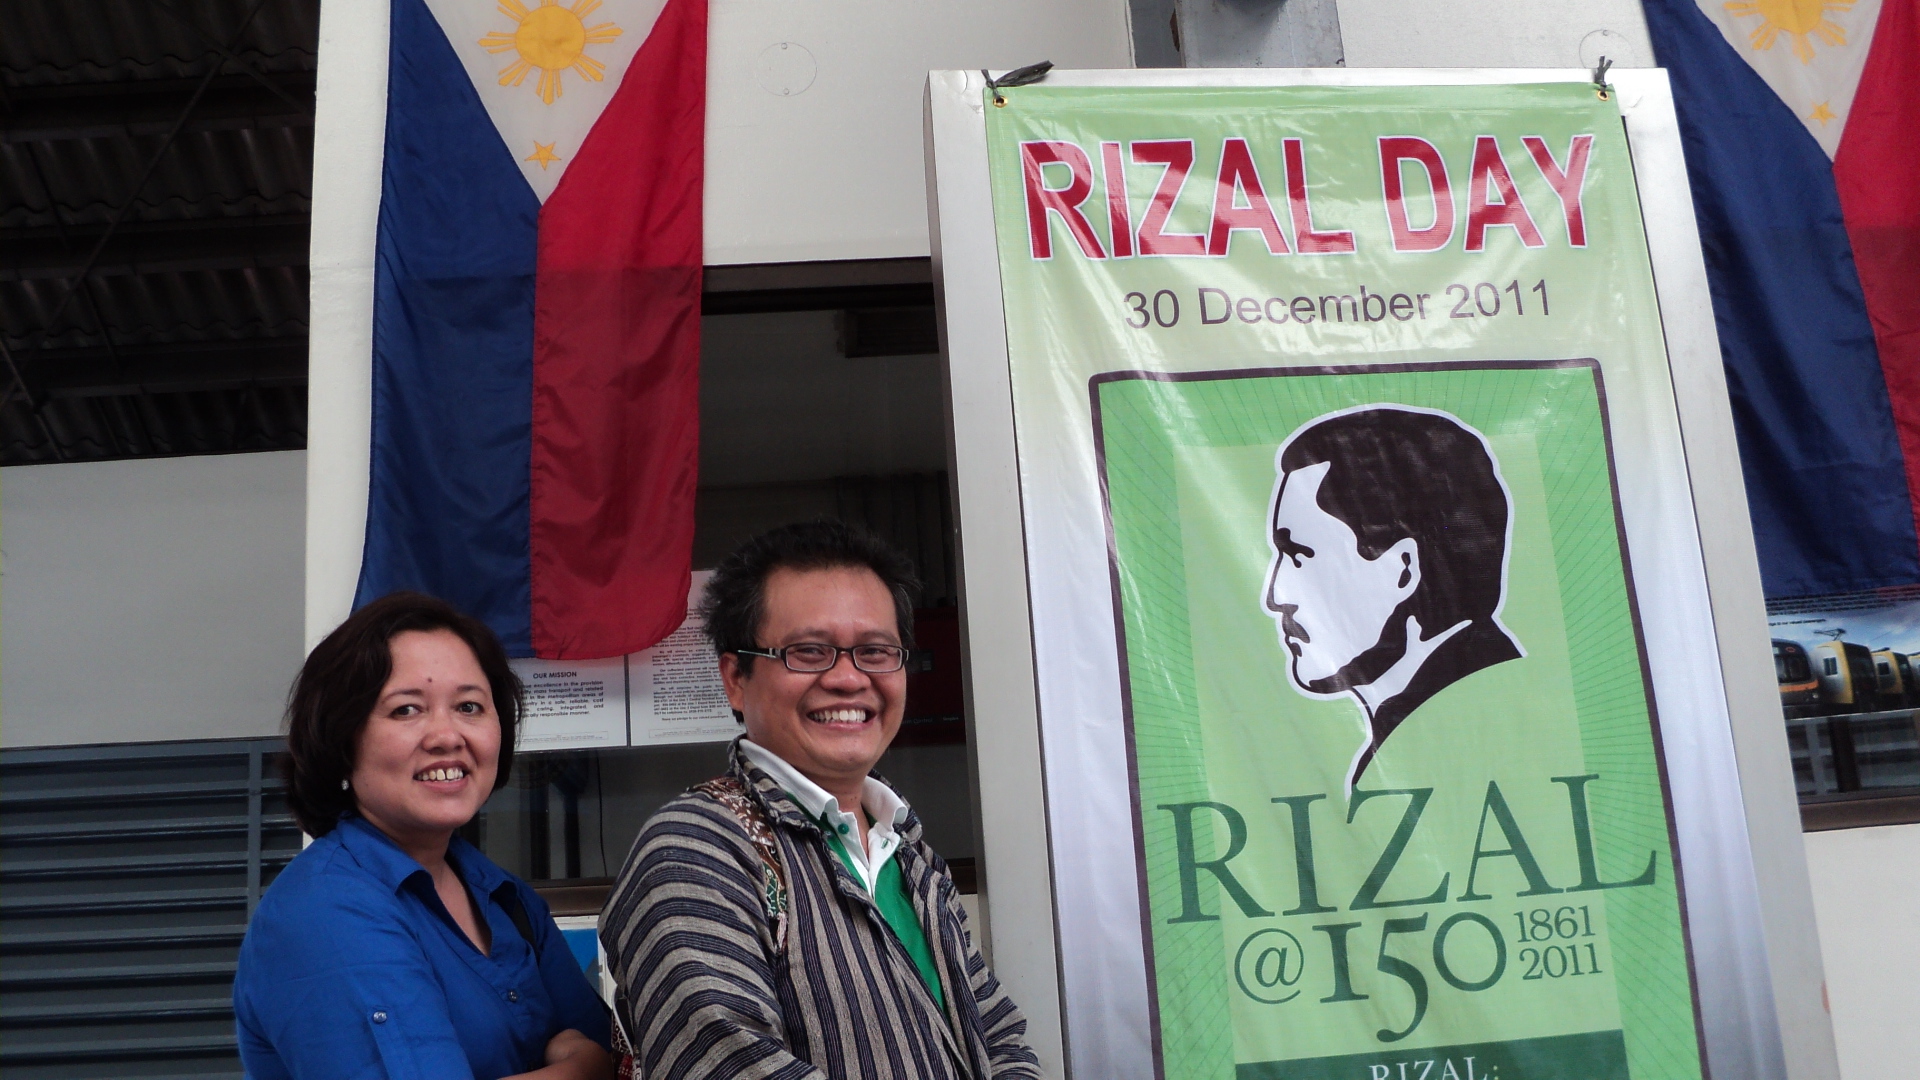 38 Rizal Day